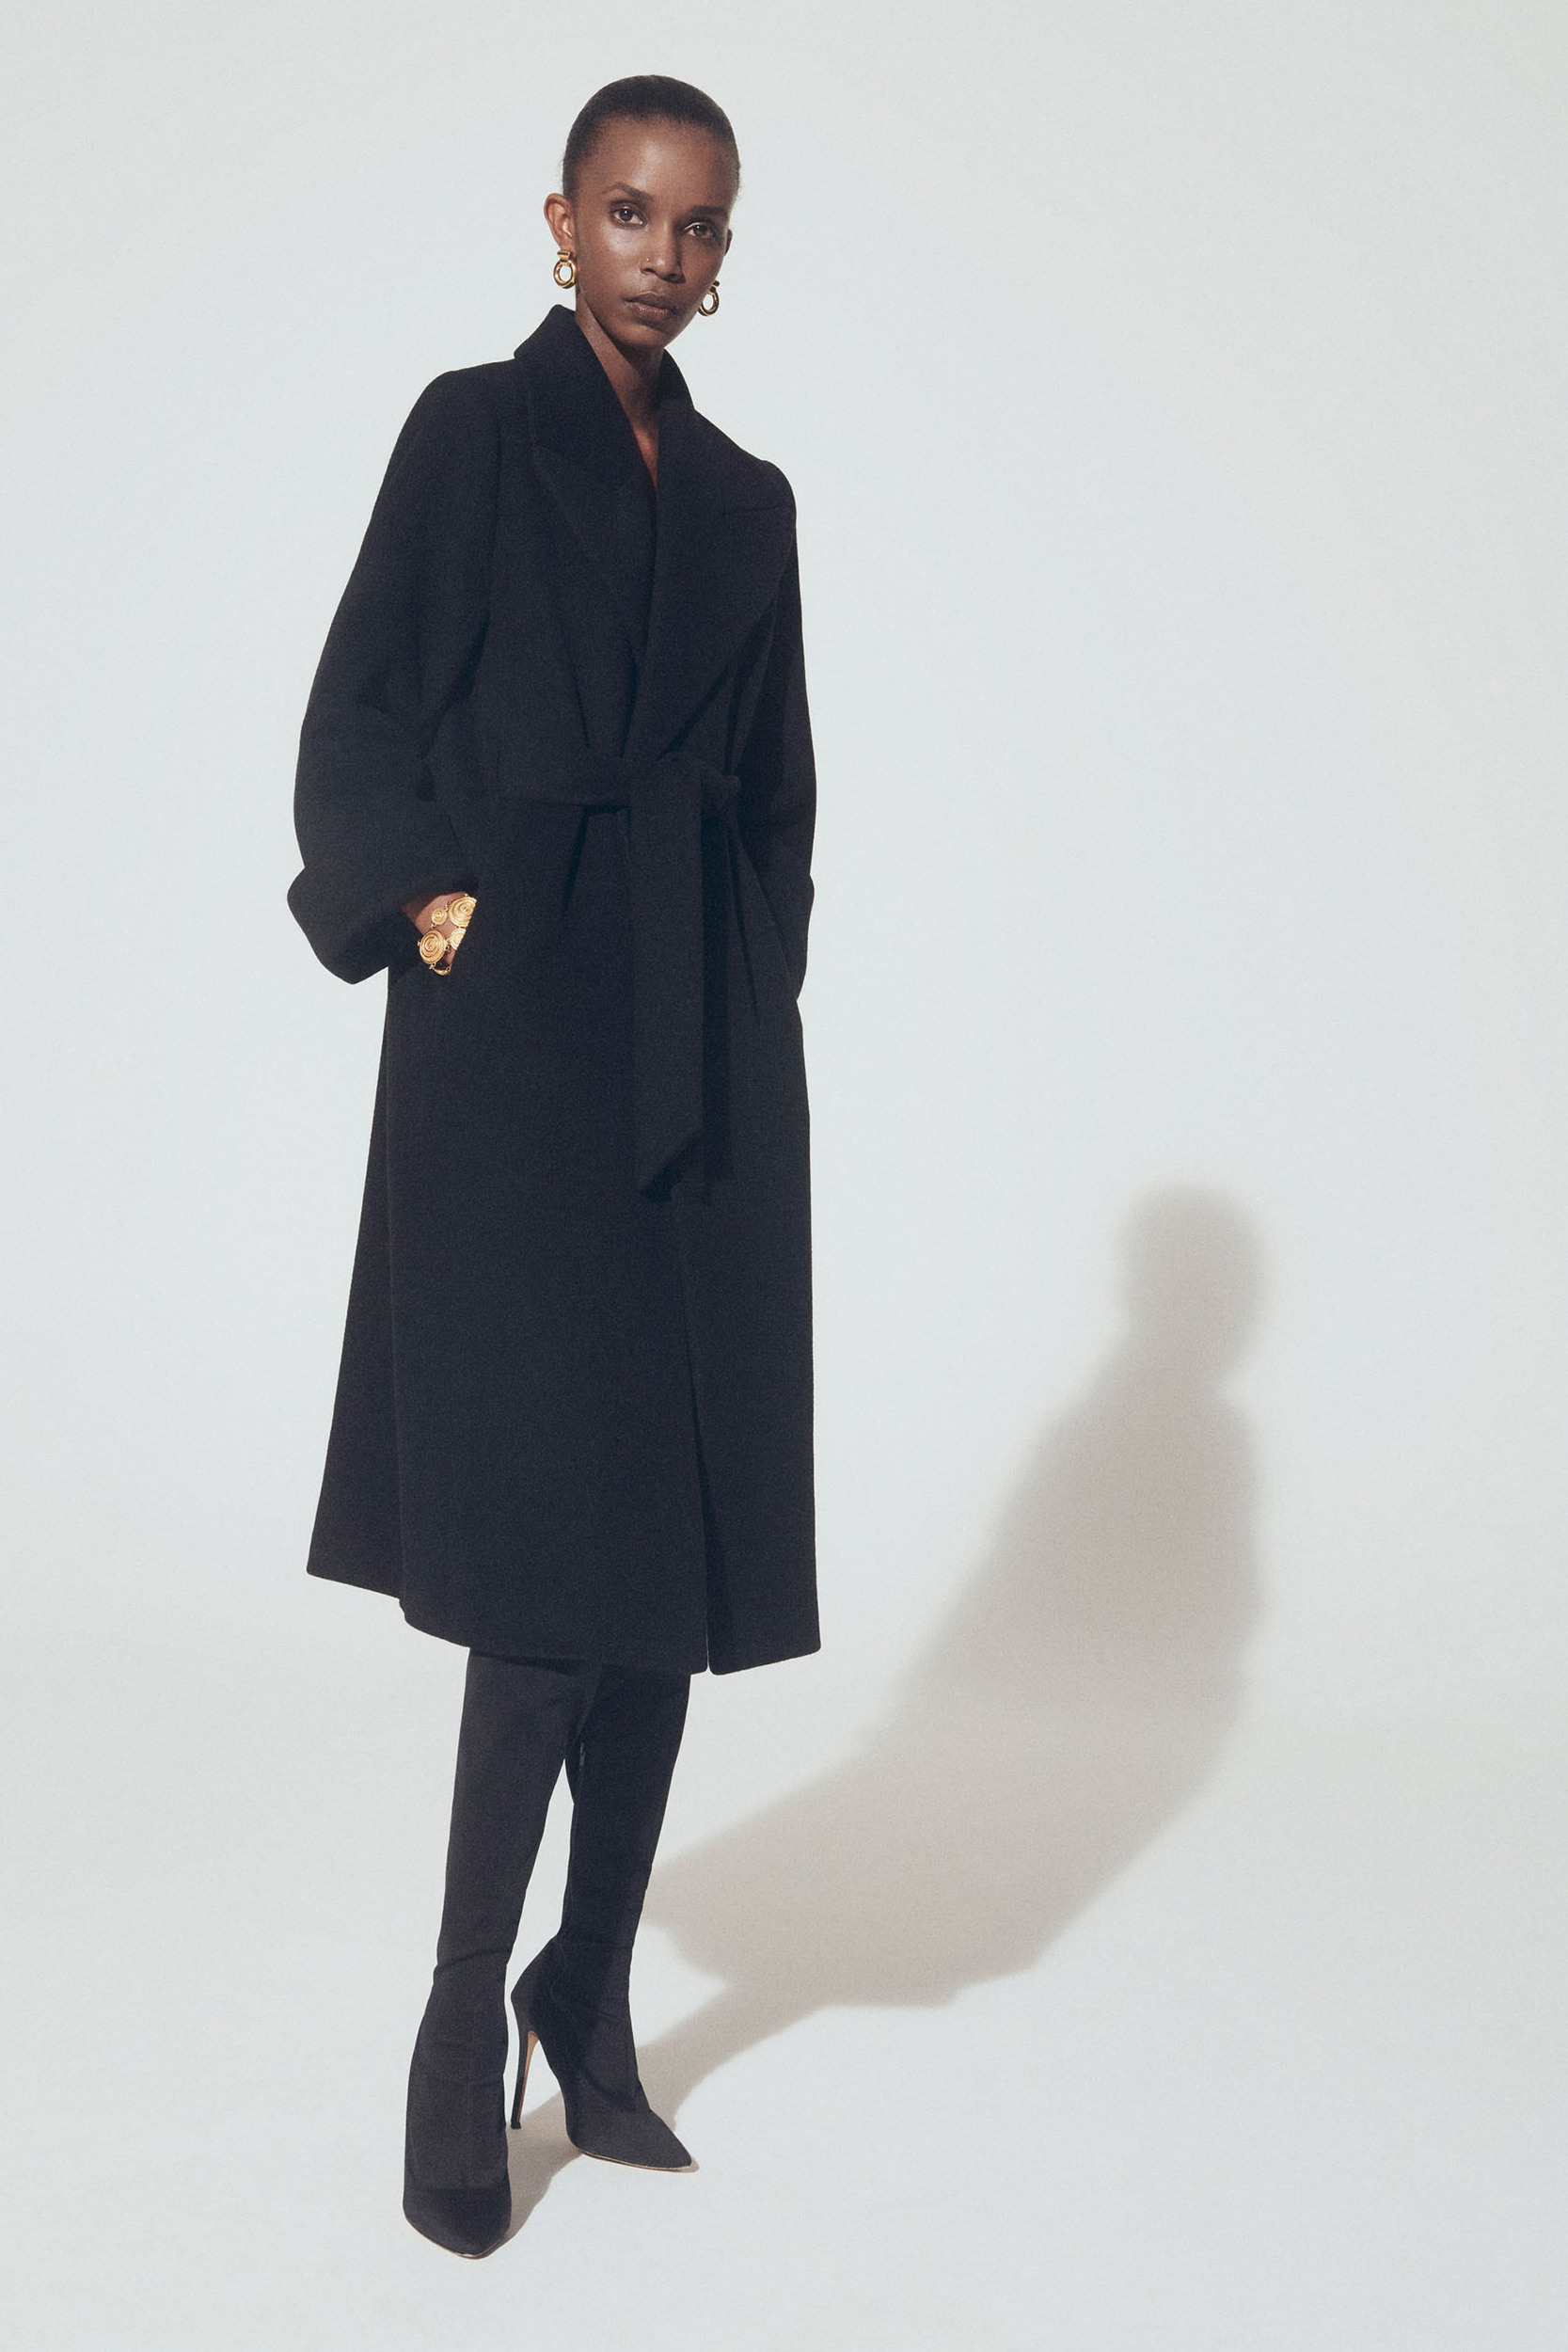 Long black coat